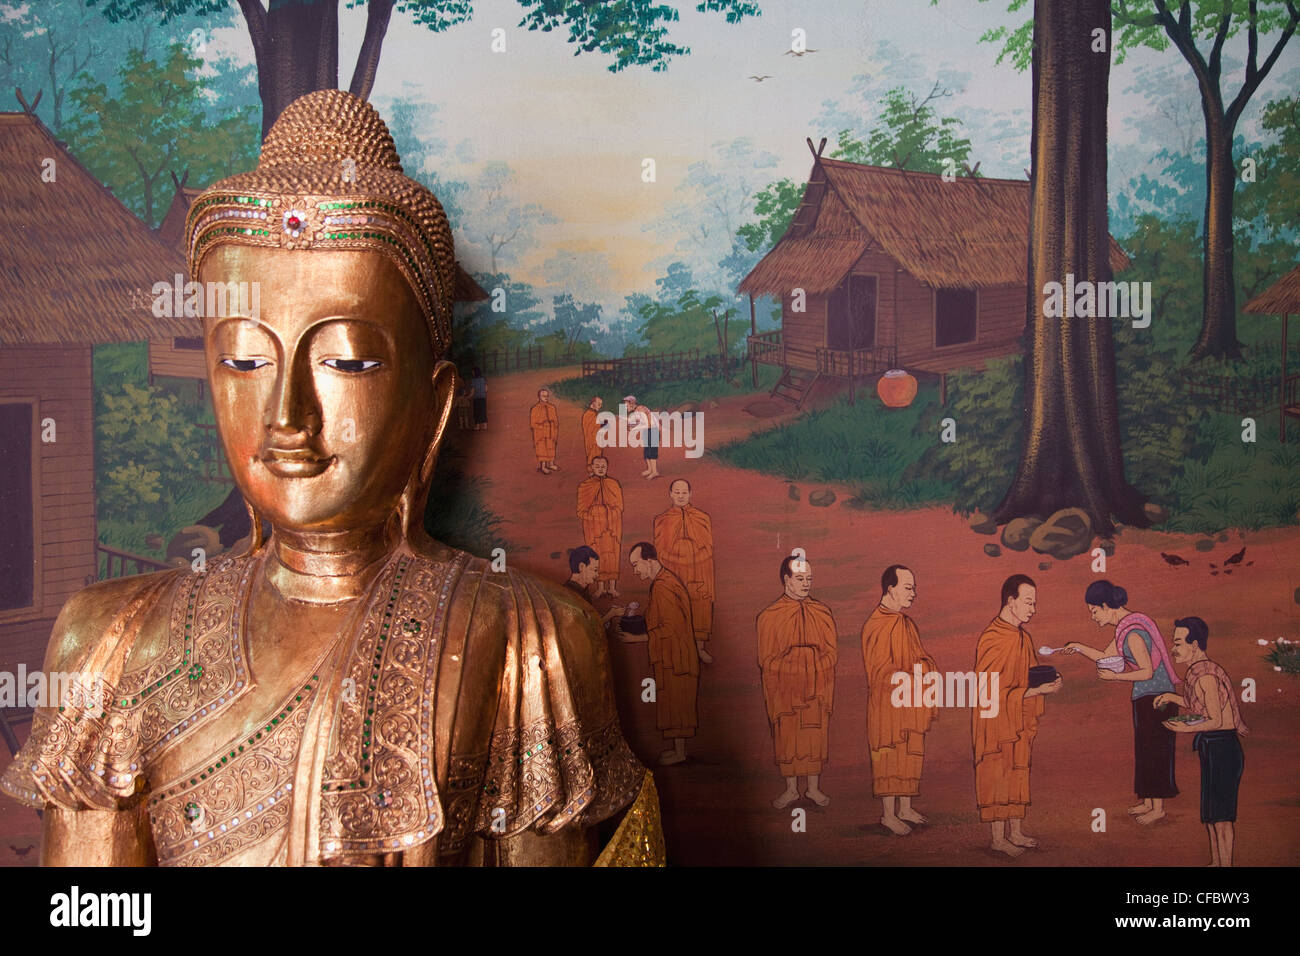 Thailand, Bangkok, Khaosan Road, Wat Chana Songkhram, Buddha Statue and Wall Art depicting Life of The Buddha Stock Photo